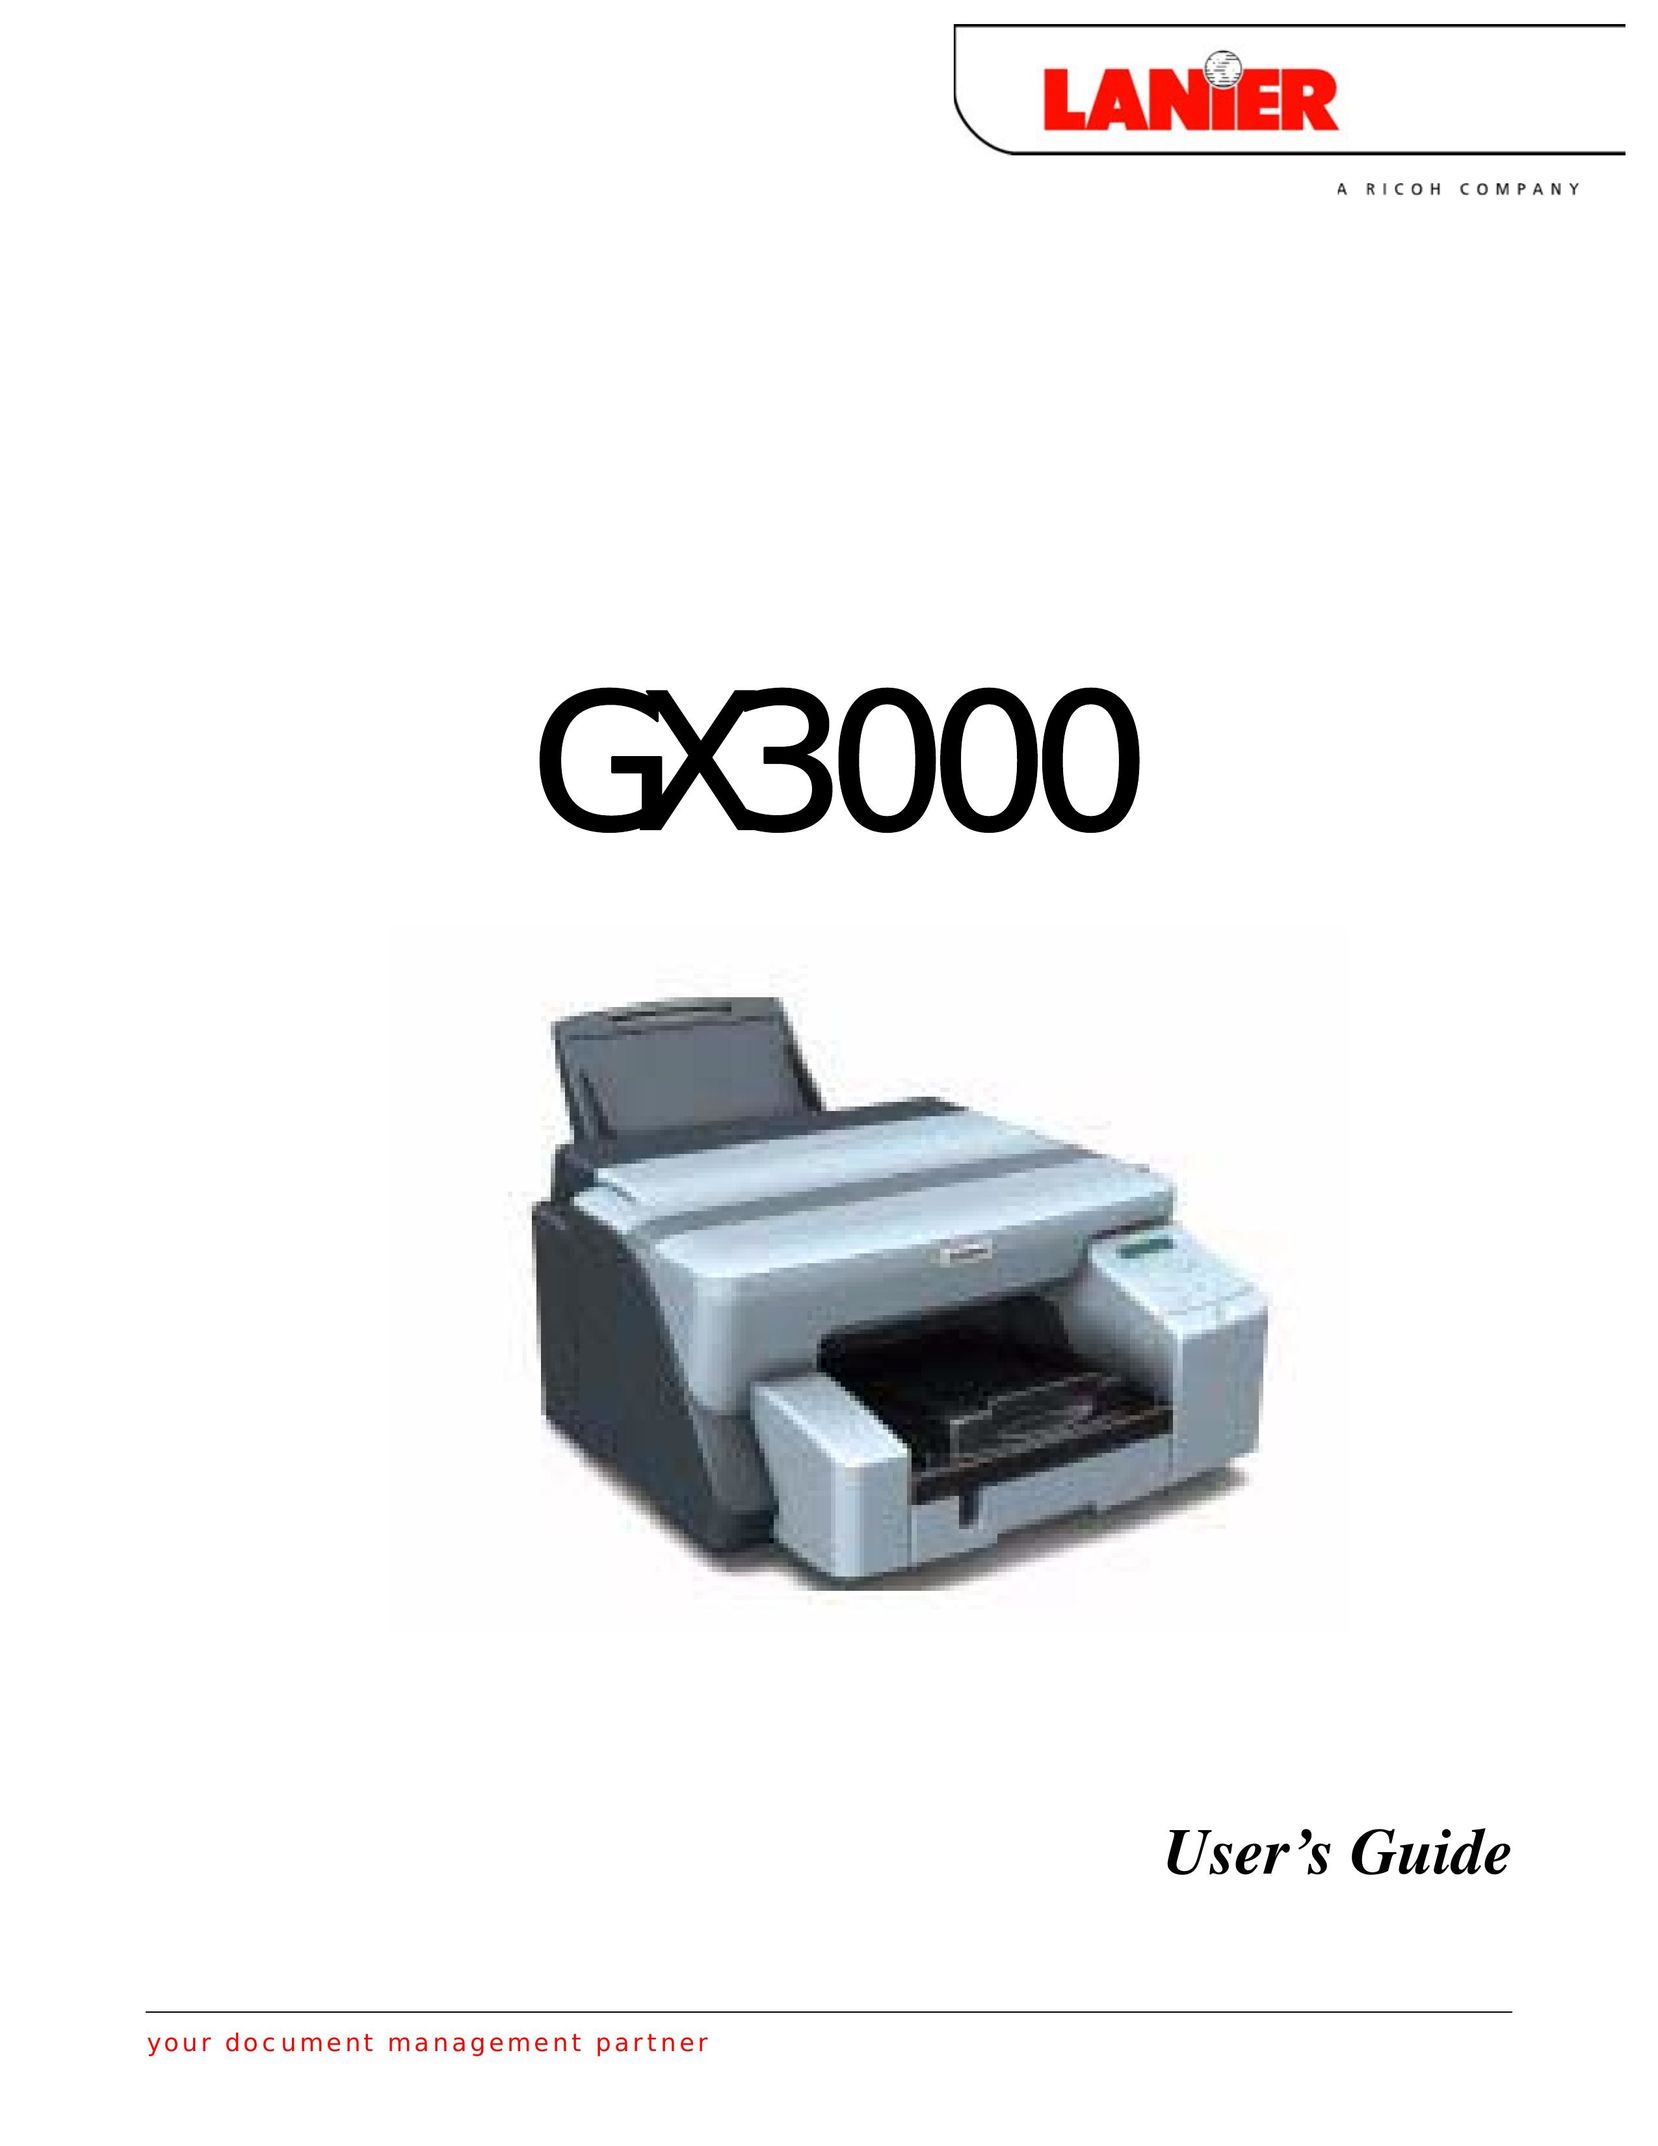 Lanier GX3000 Printer User Manual